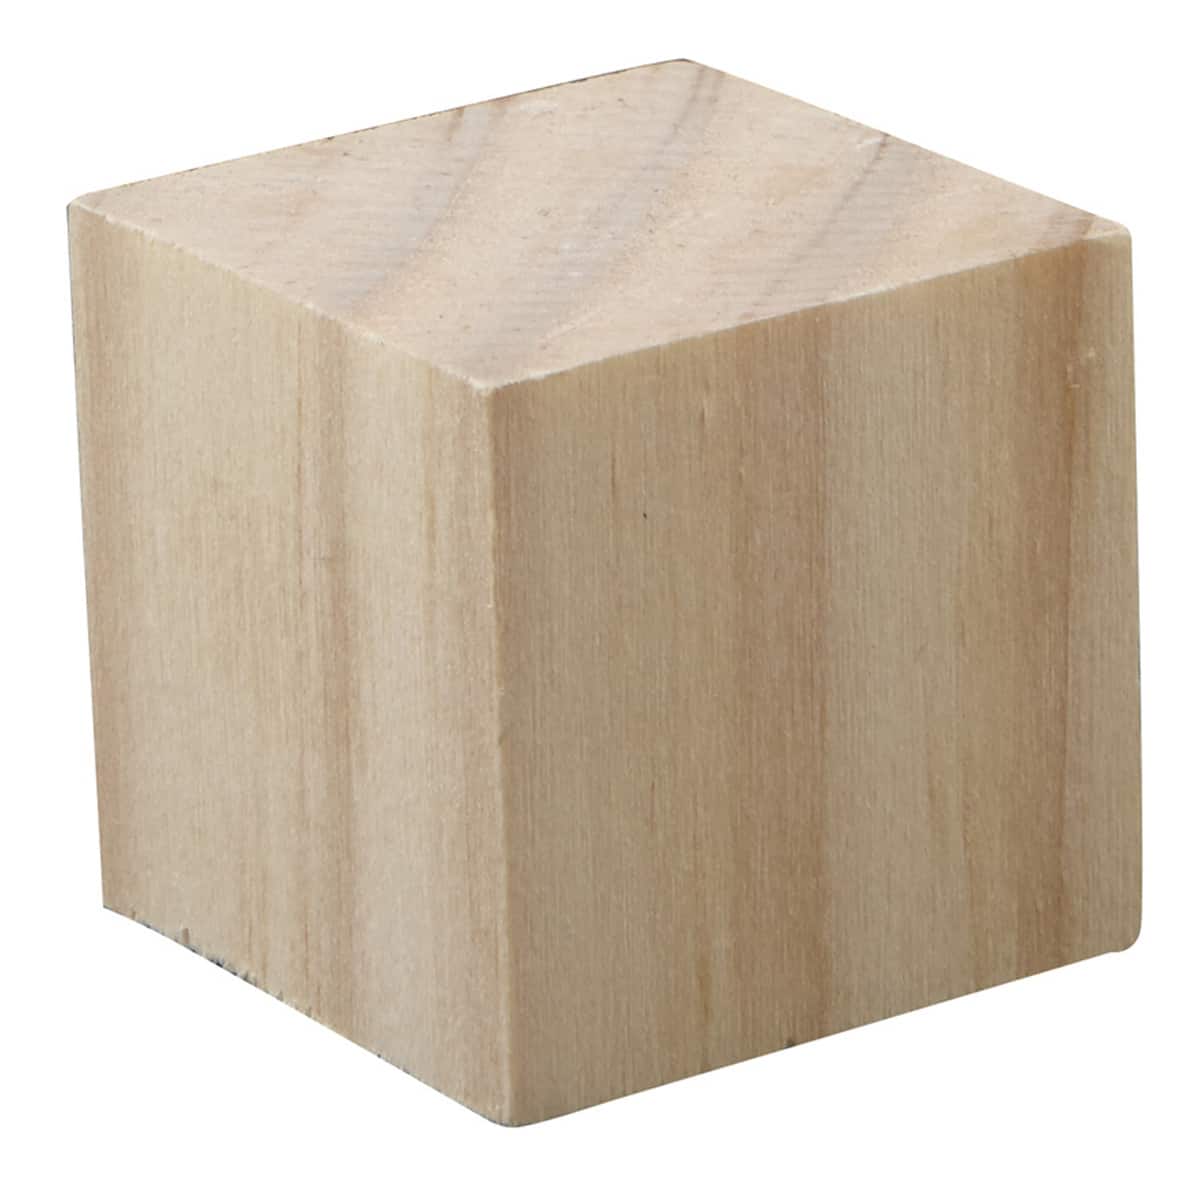 Wood blocks for crafts